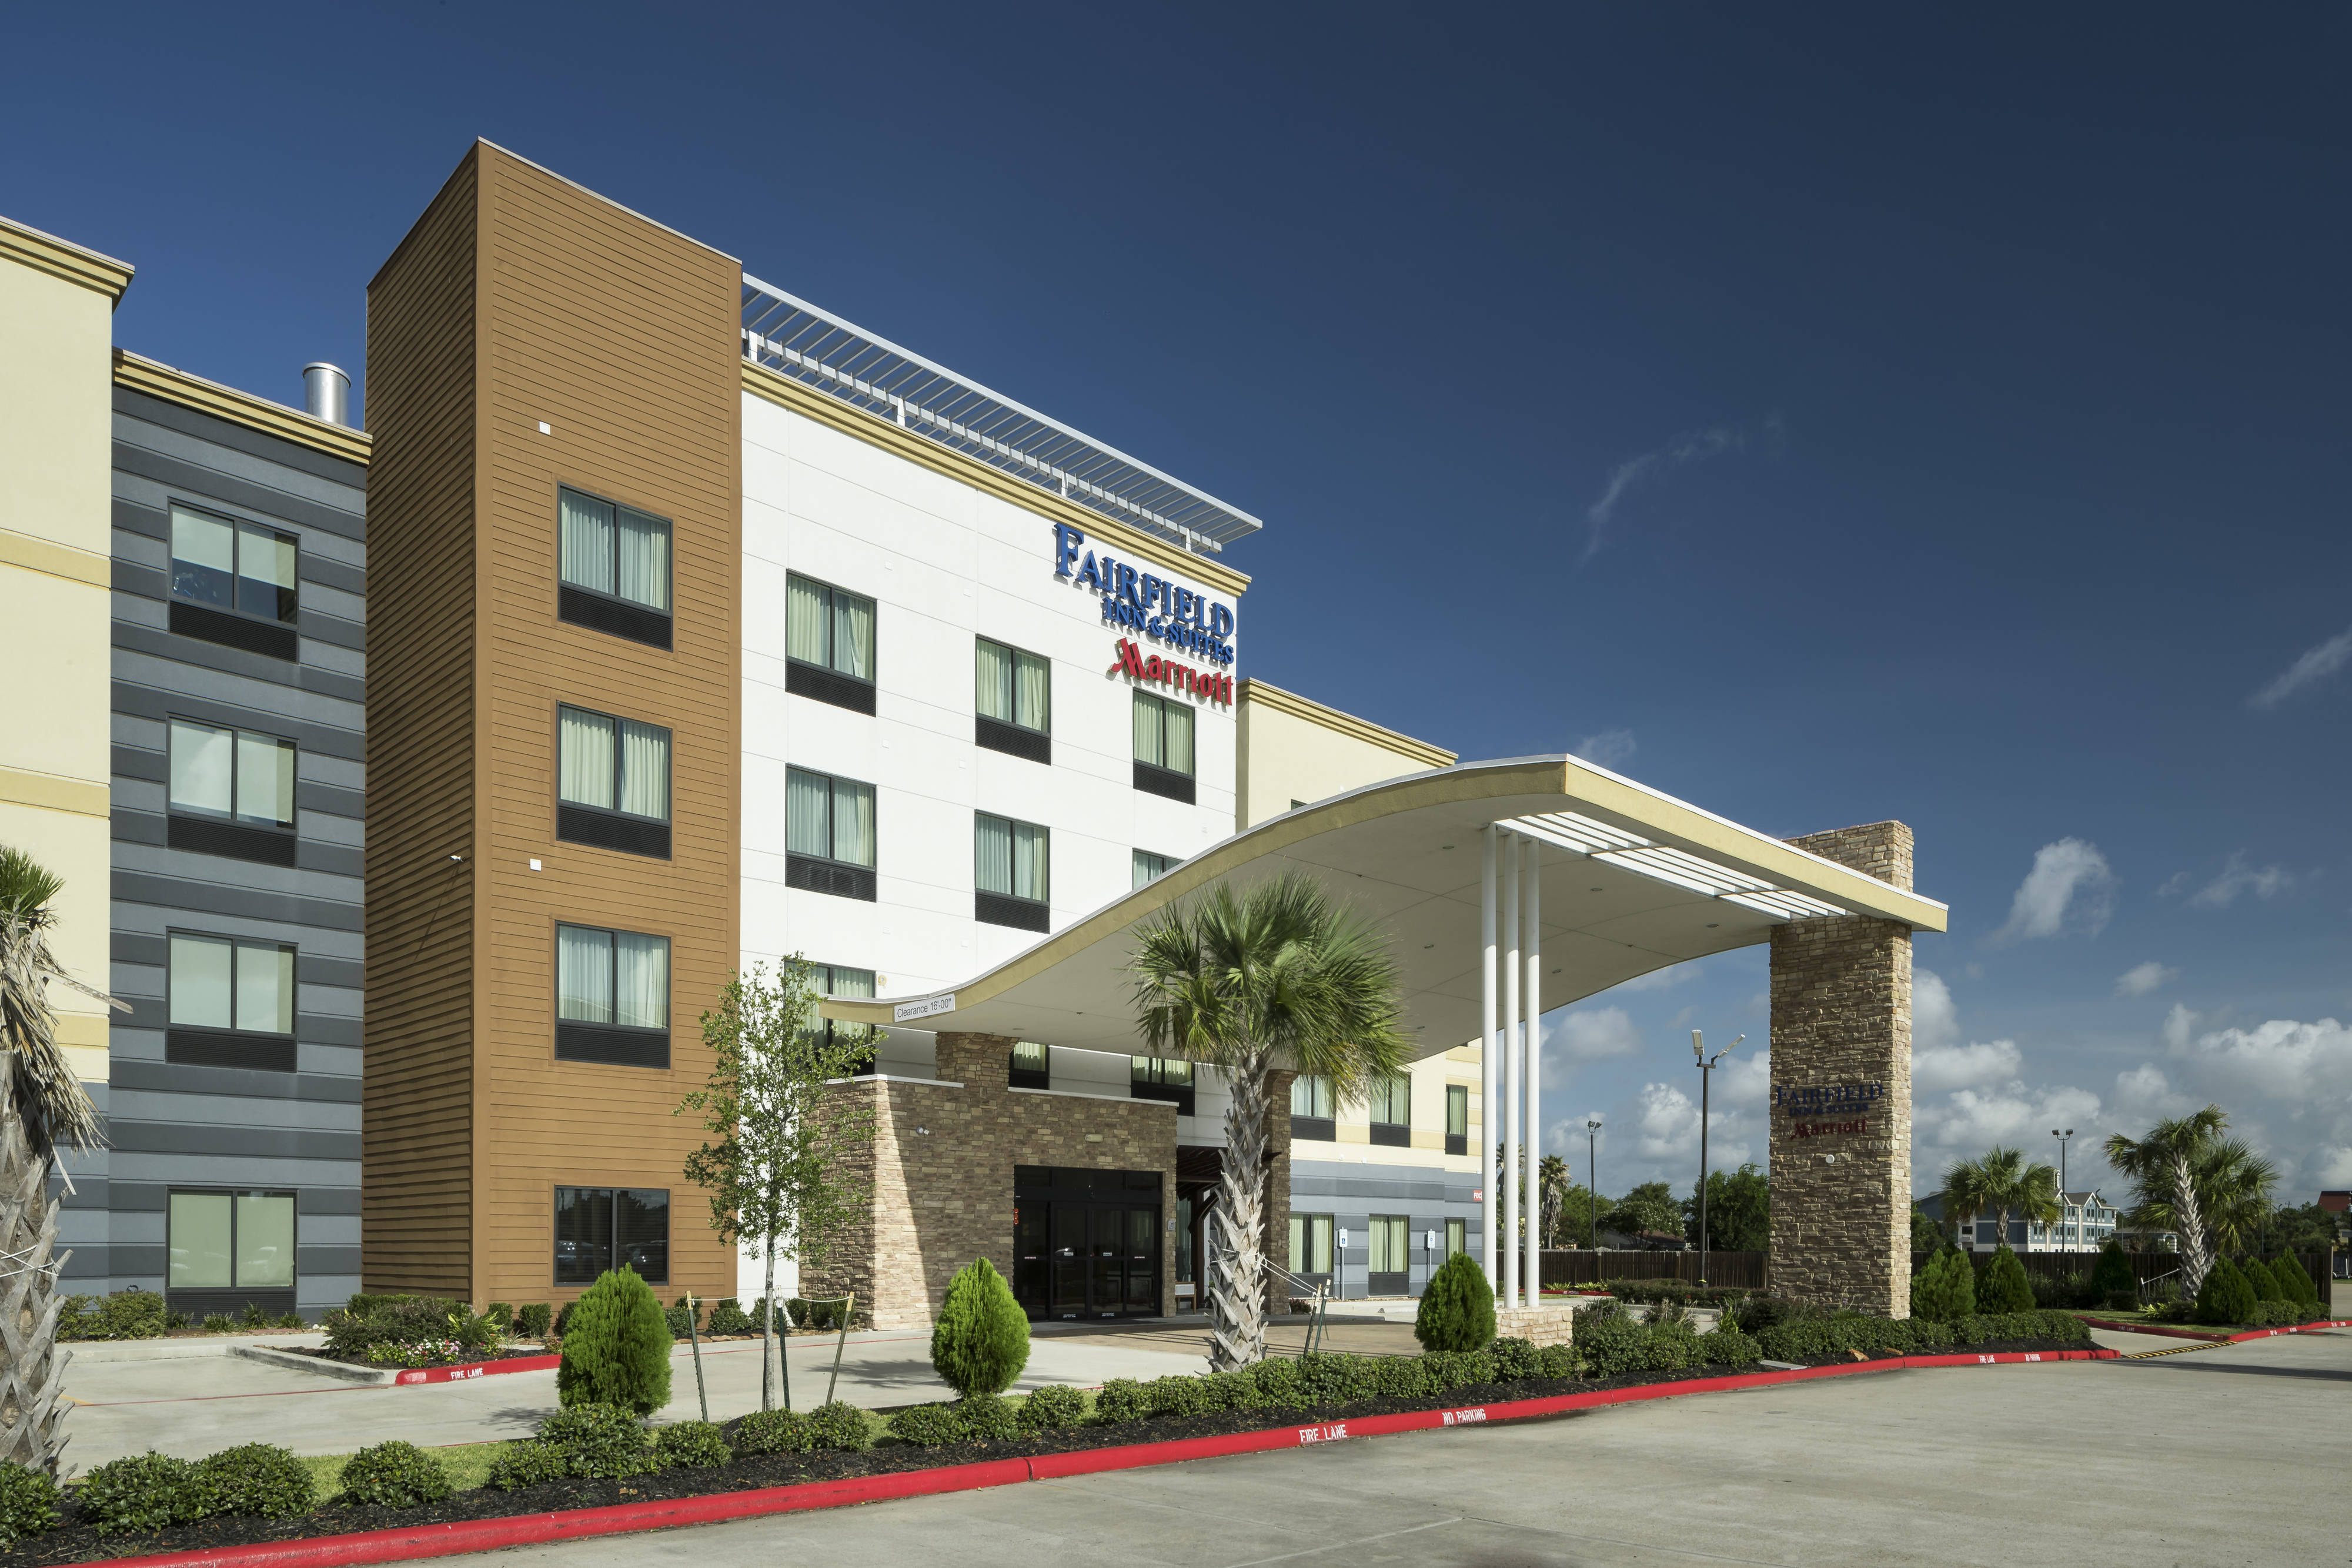 Photo of Fairfield Inn & Suites by Marriott Houston Pasadena, Pasadena, TX